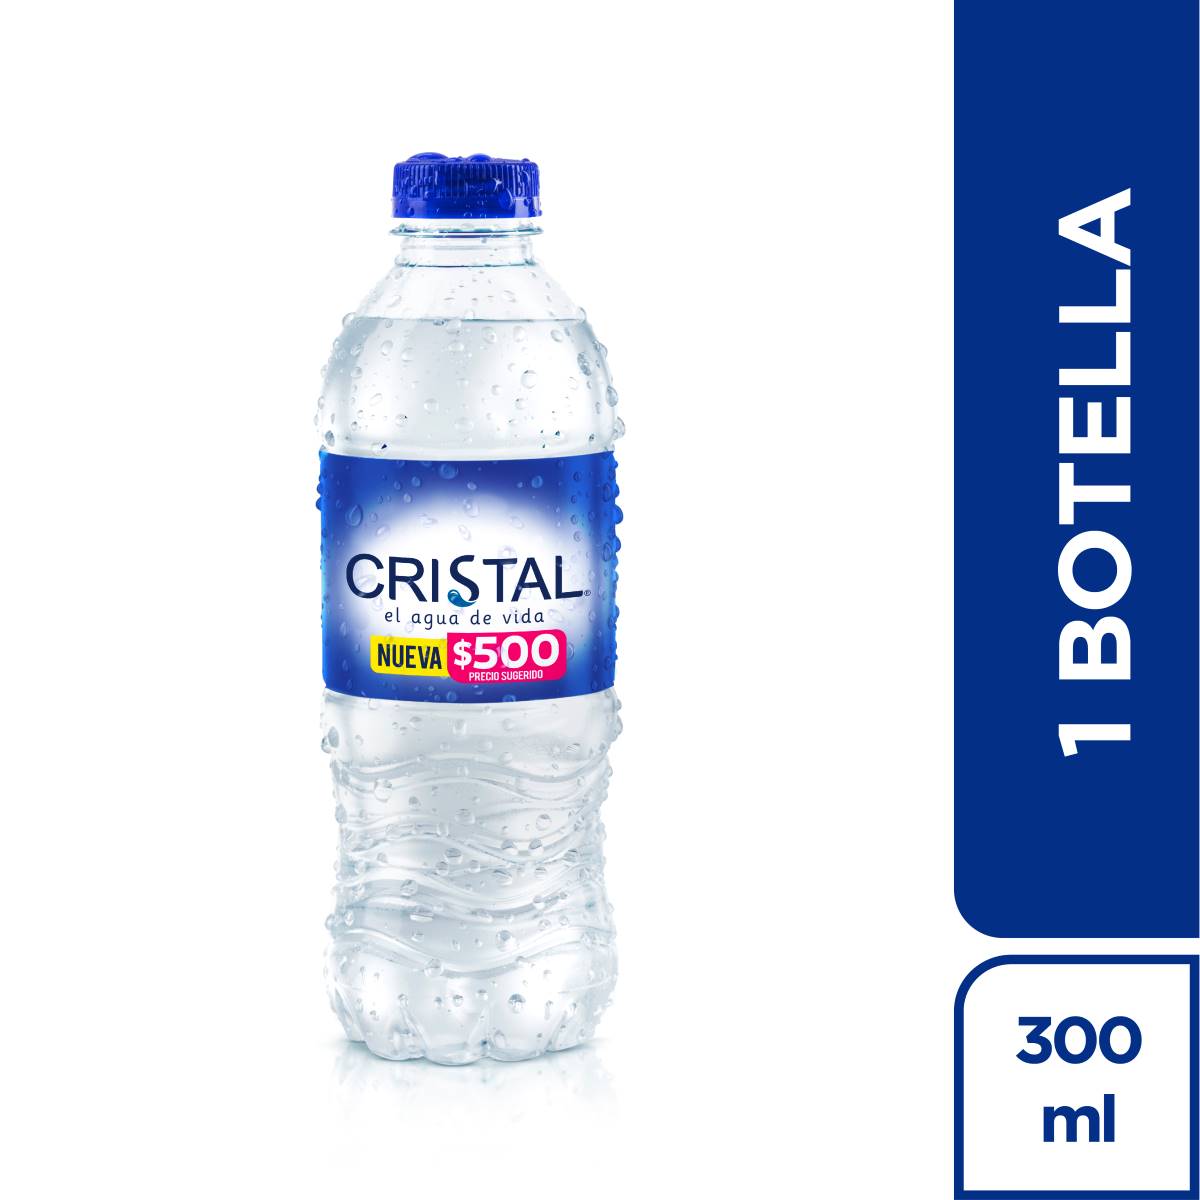 Comprar Agua Pura Cristal - 600Ml, botella de agua cristal 